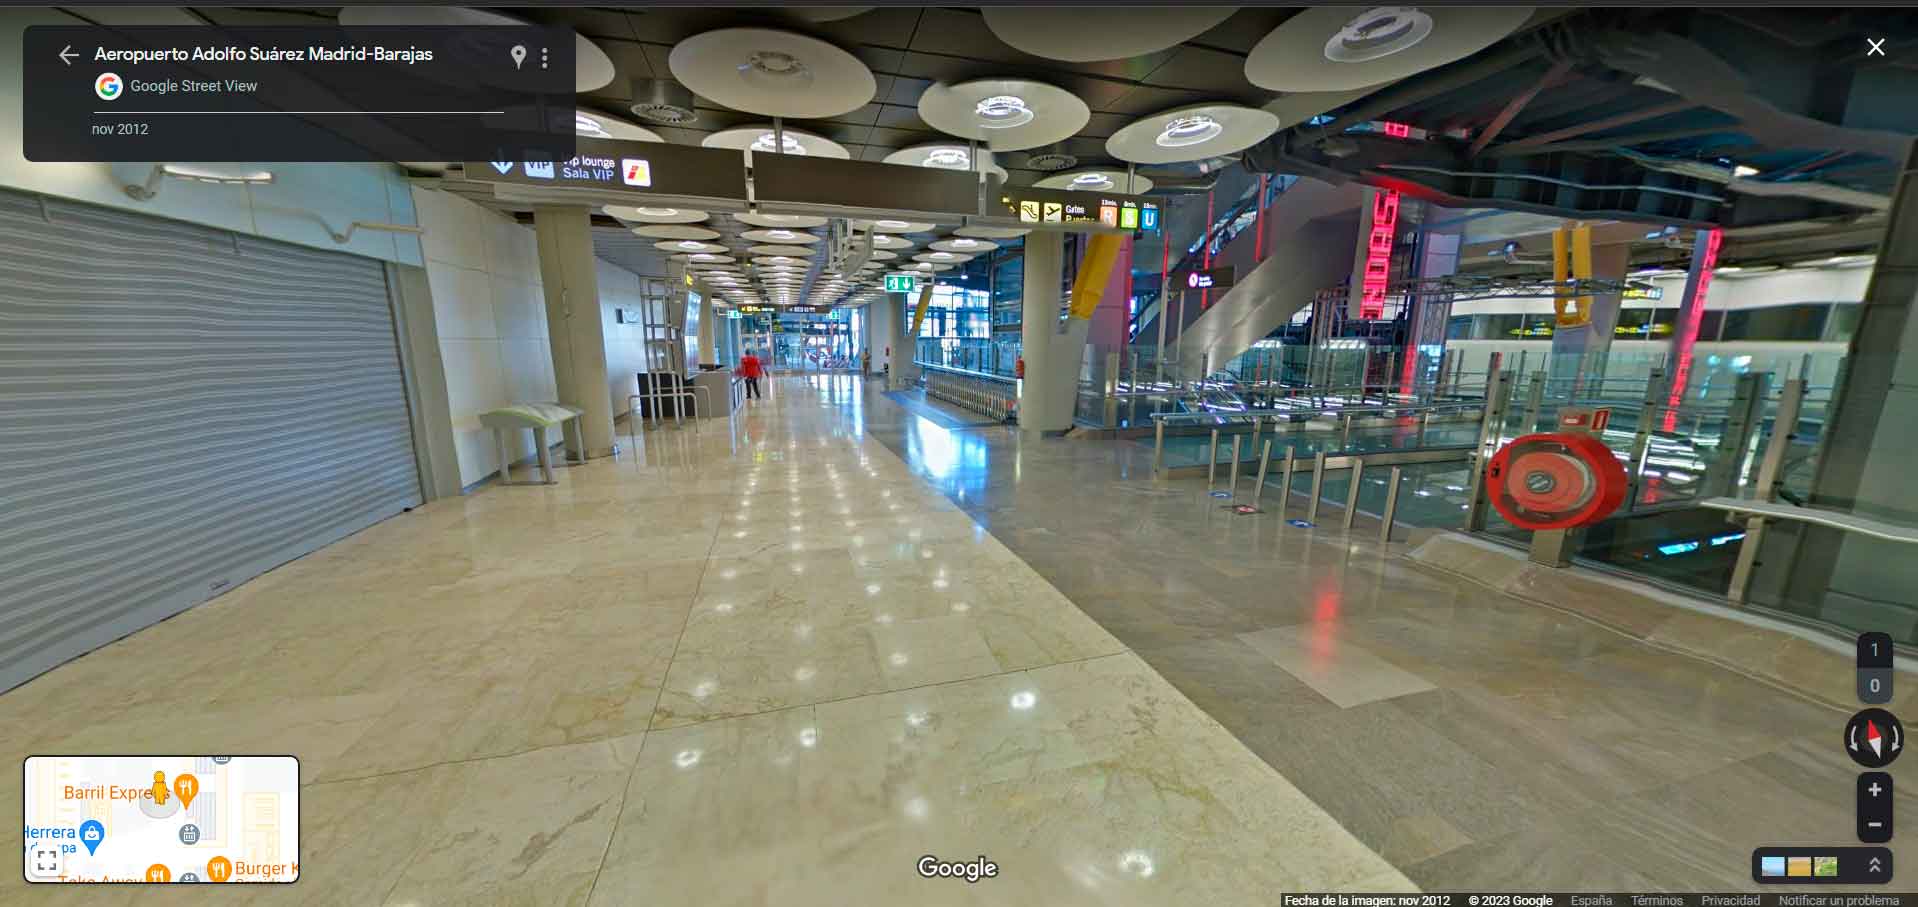 Google Maps now allows you to explore interiors